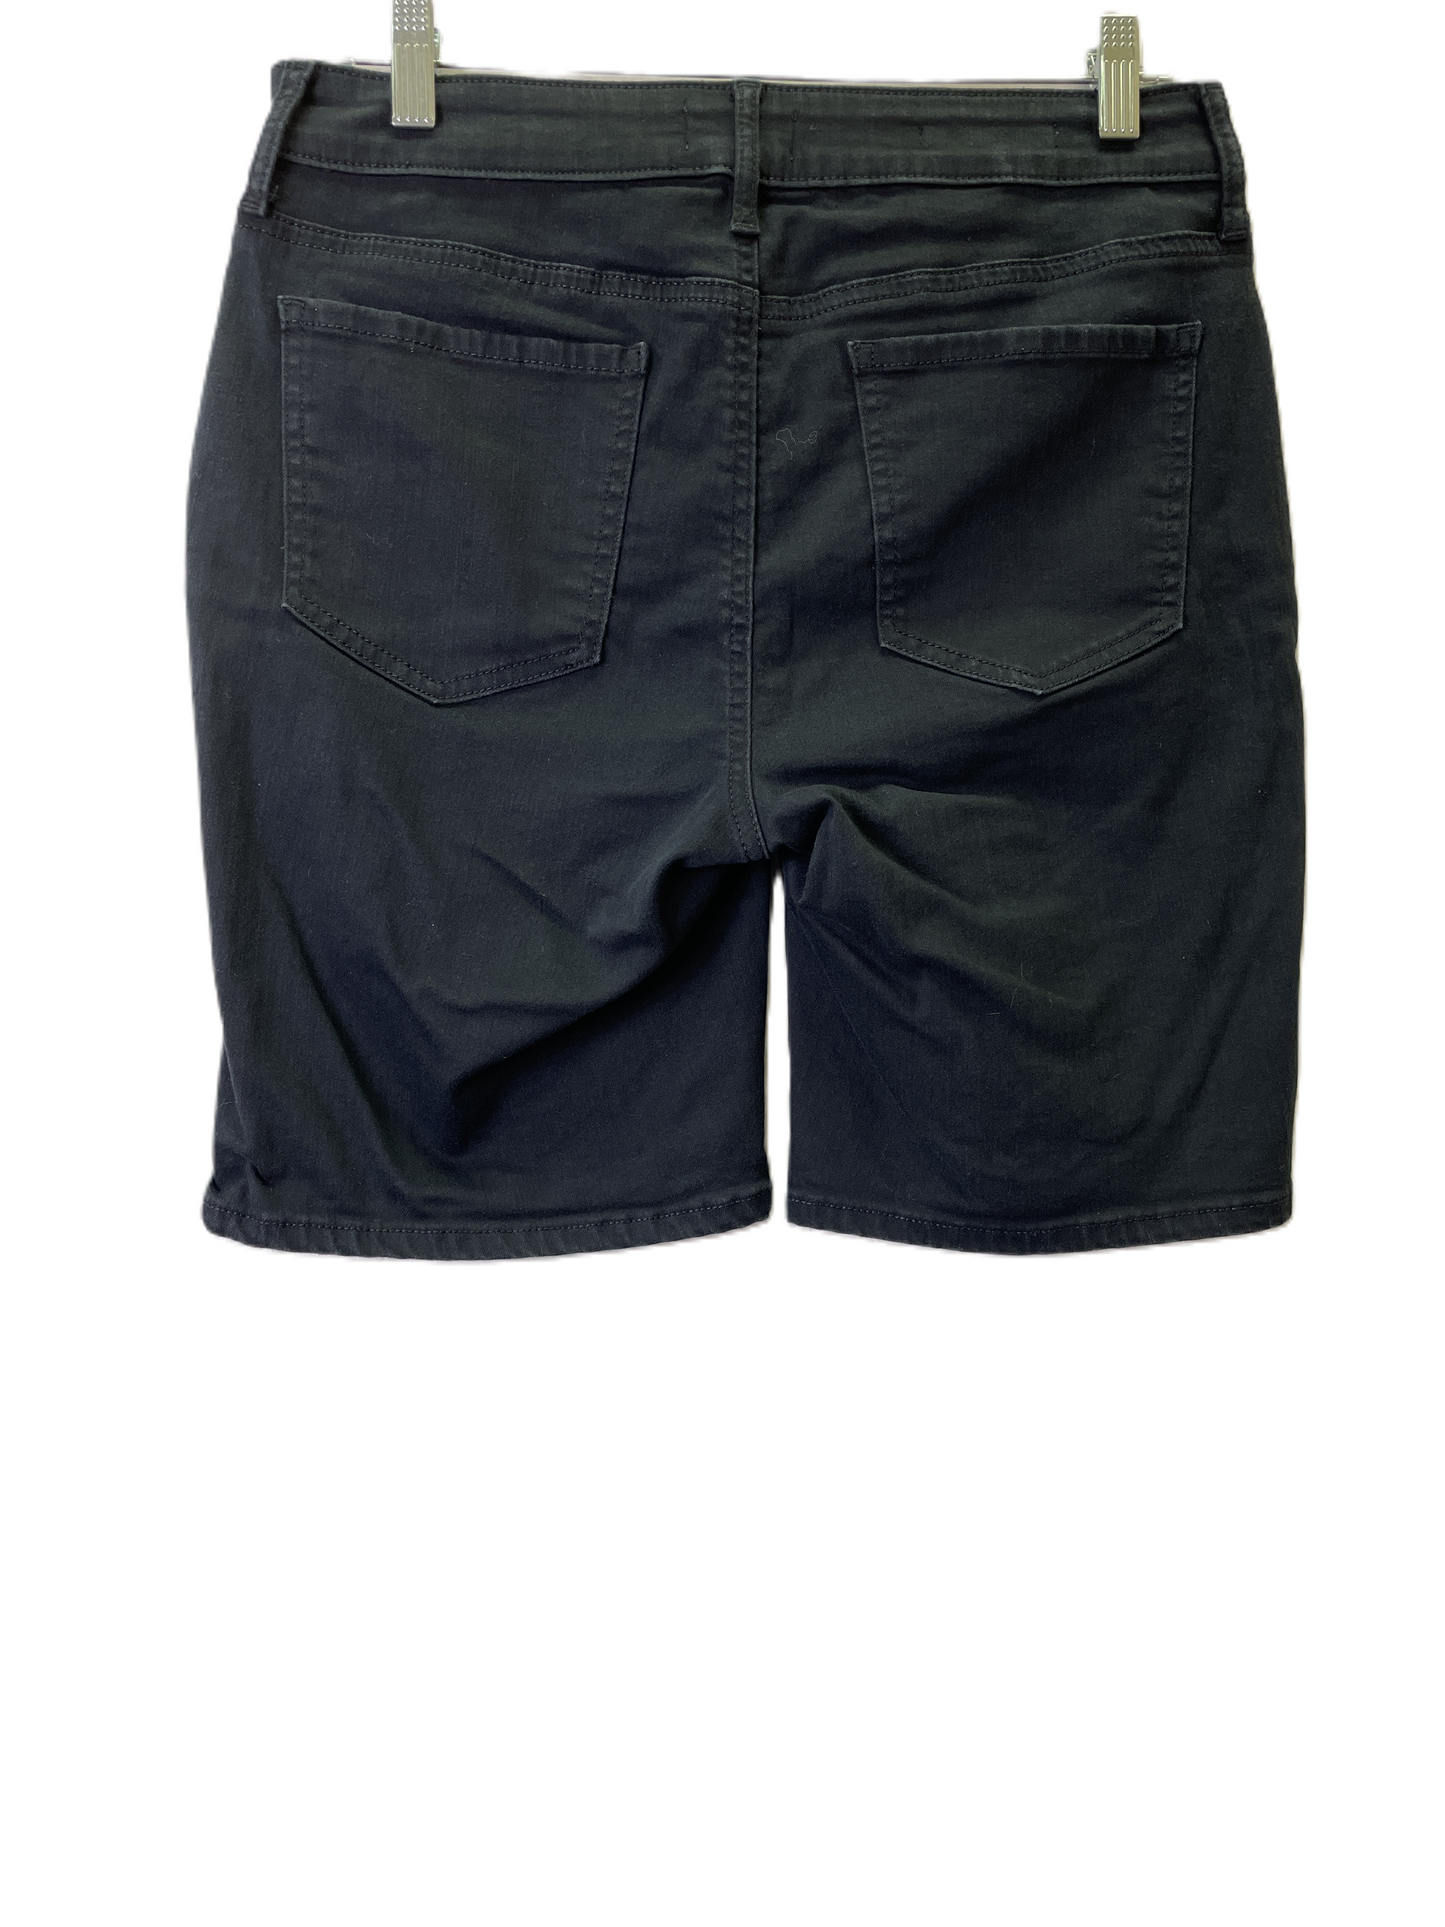 Black Shorts By N Y D J SHORTS Size: 6